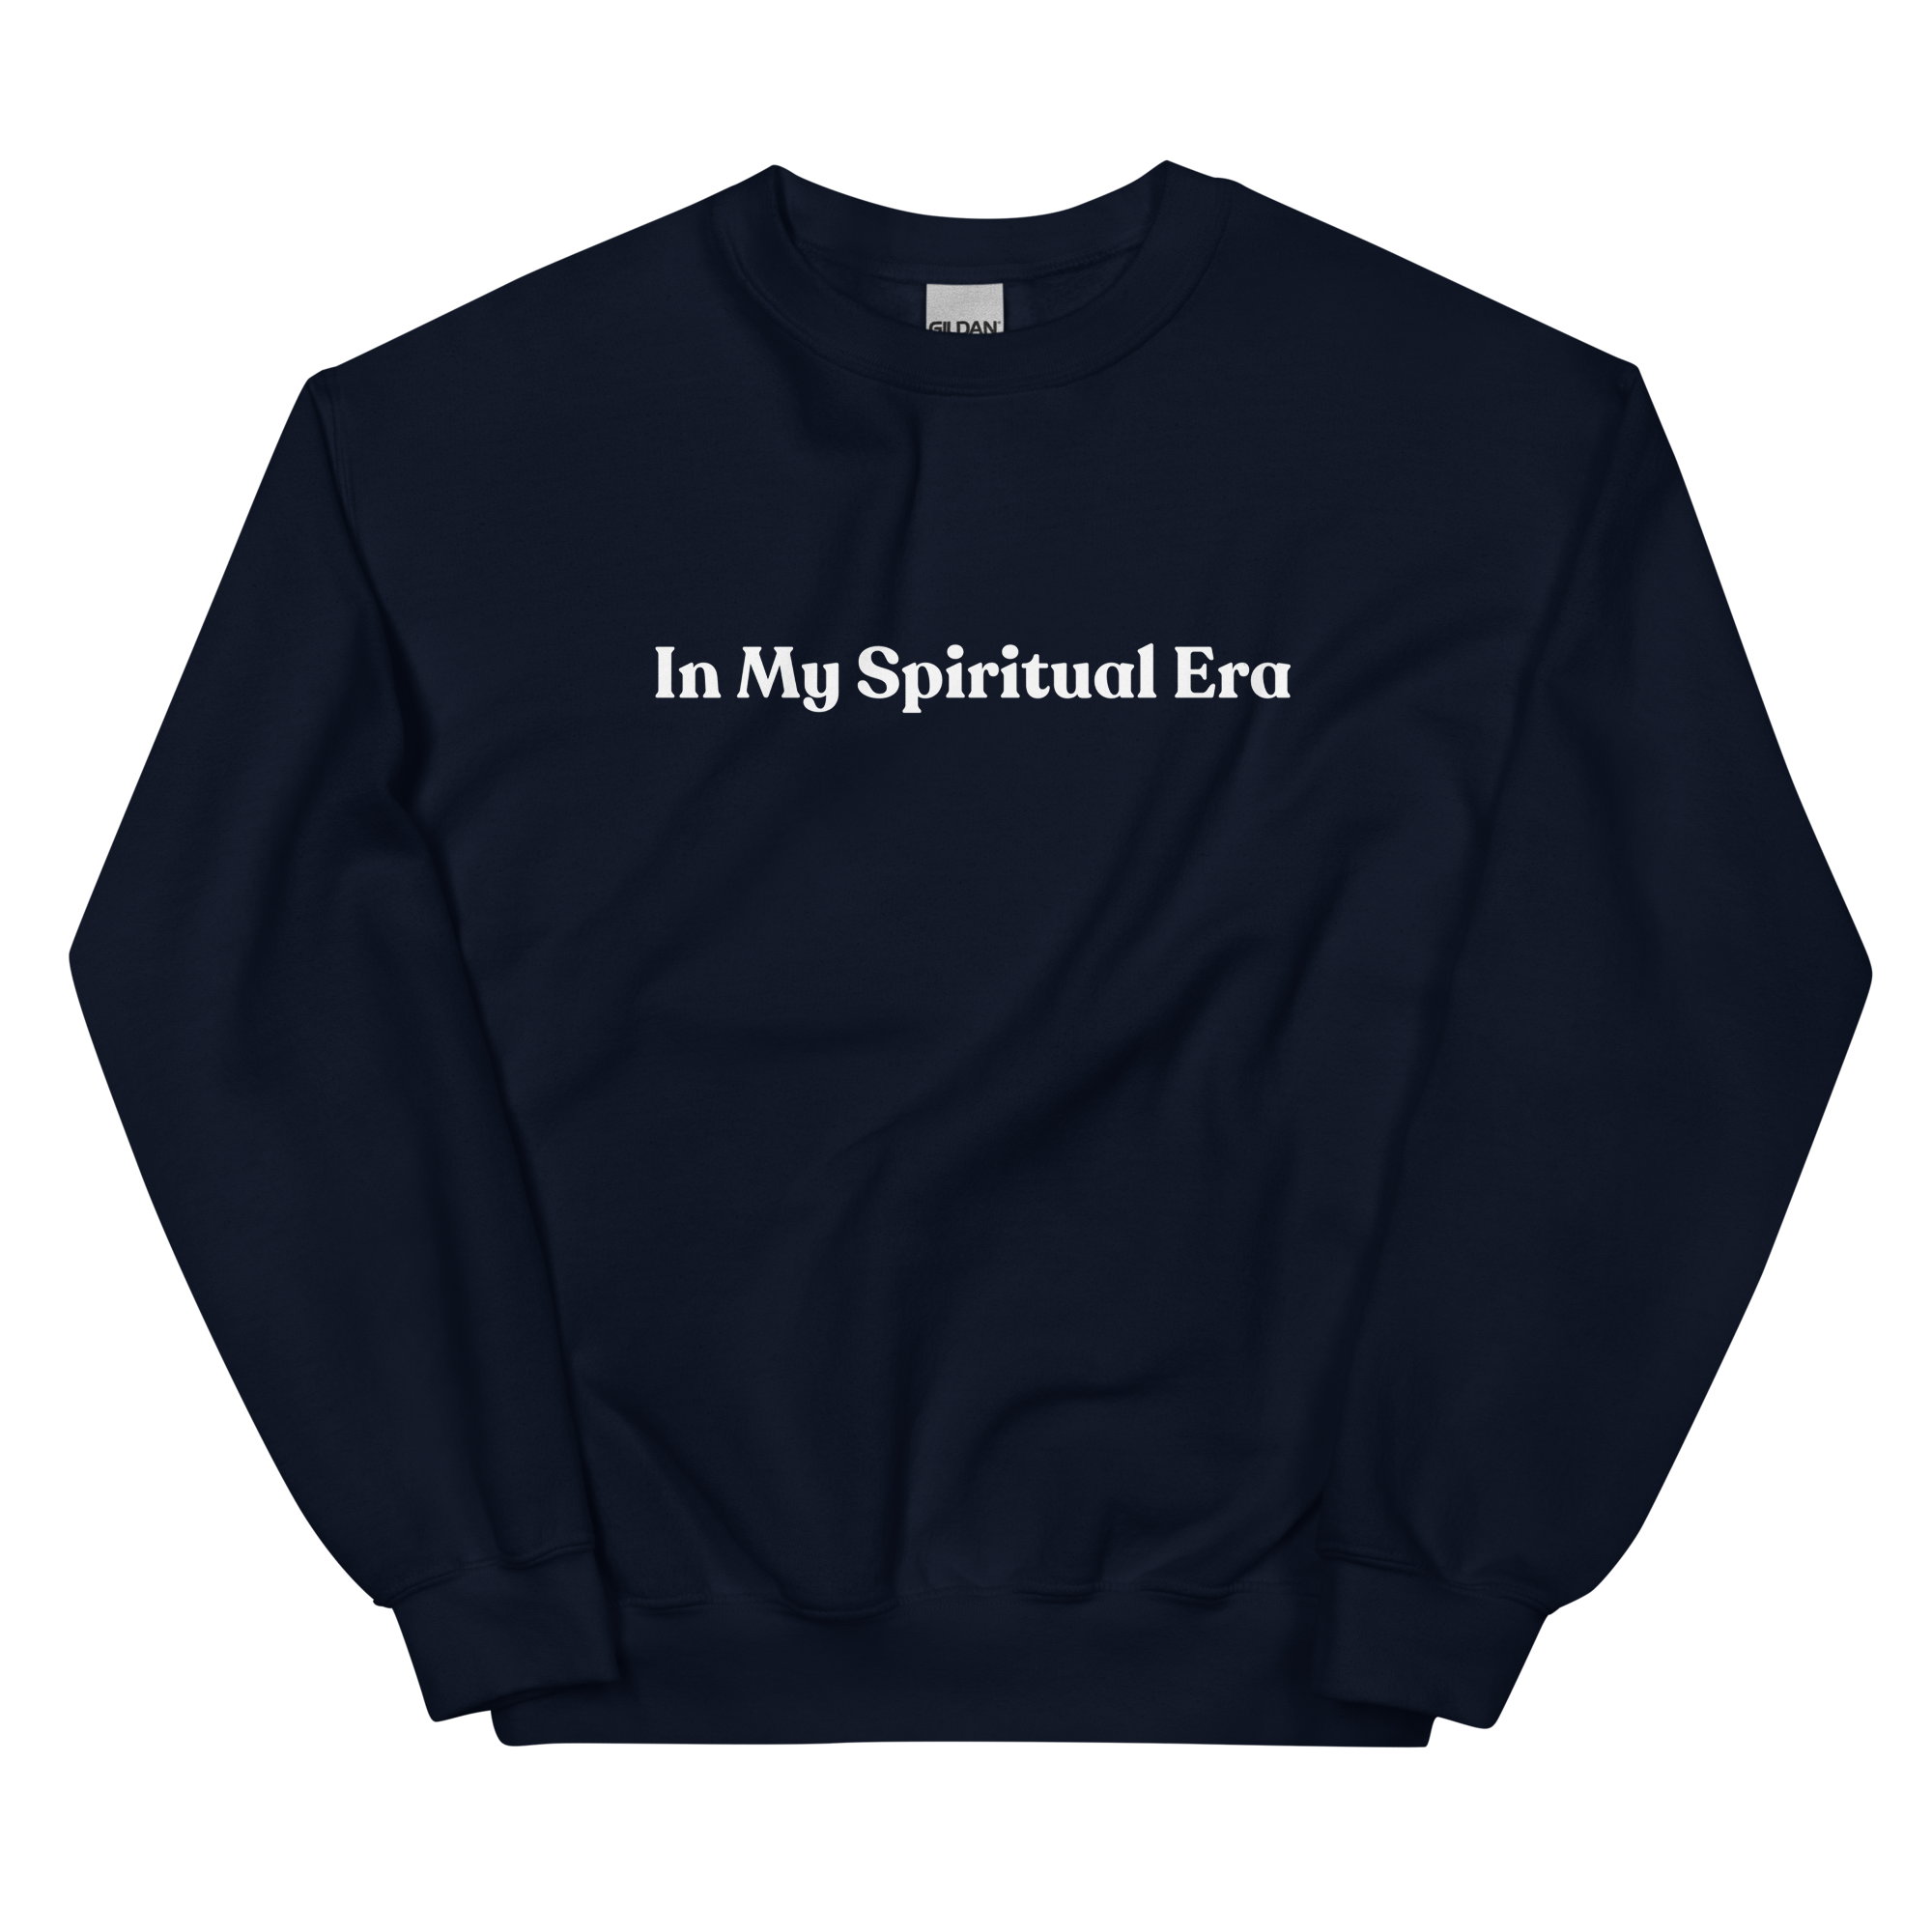 In My Spiritual Era Sweatshirt.